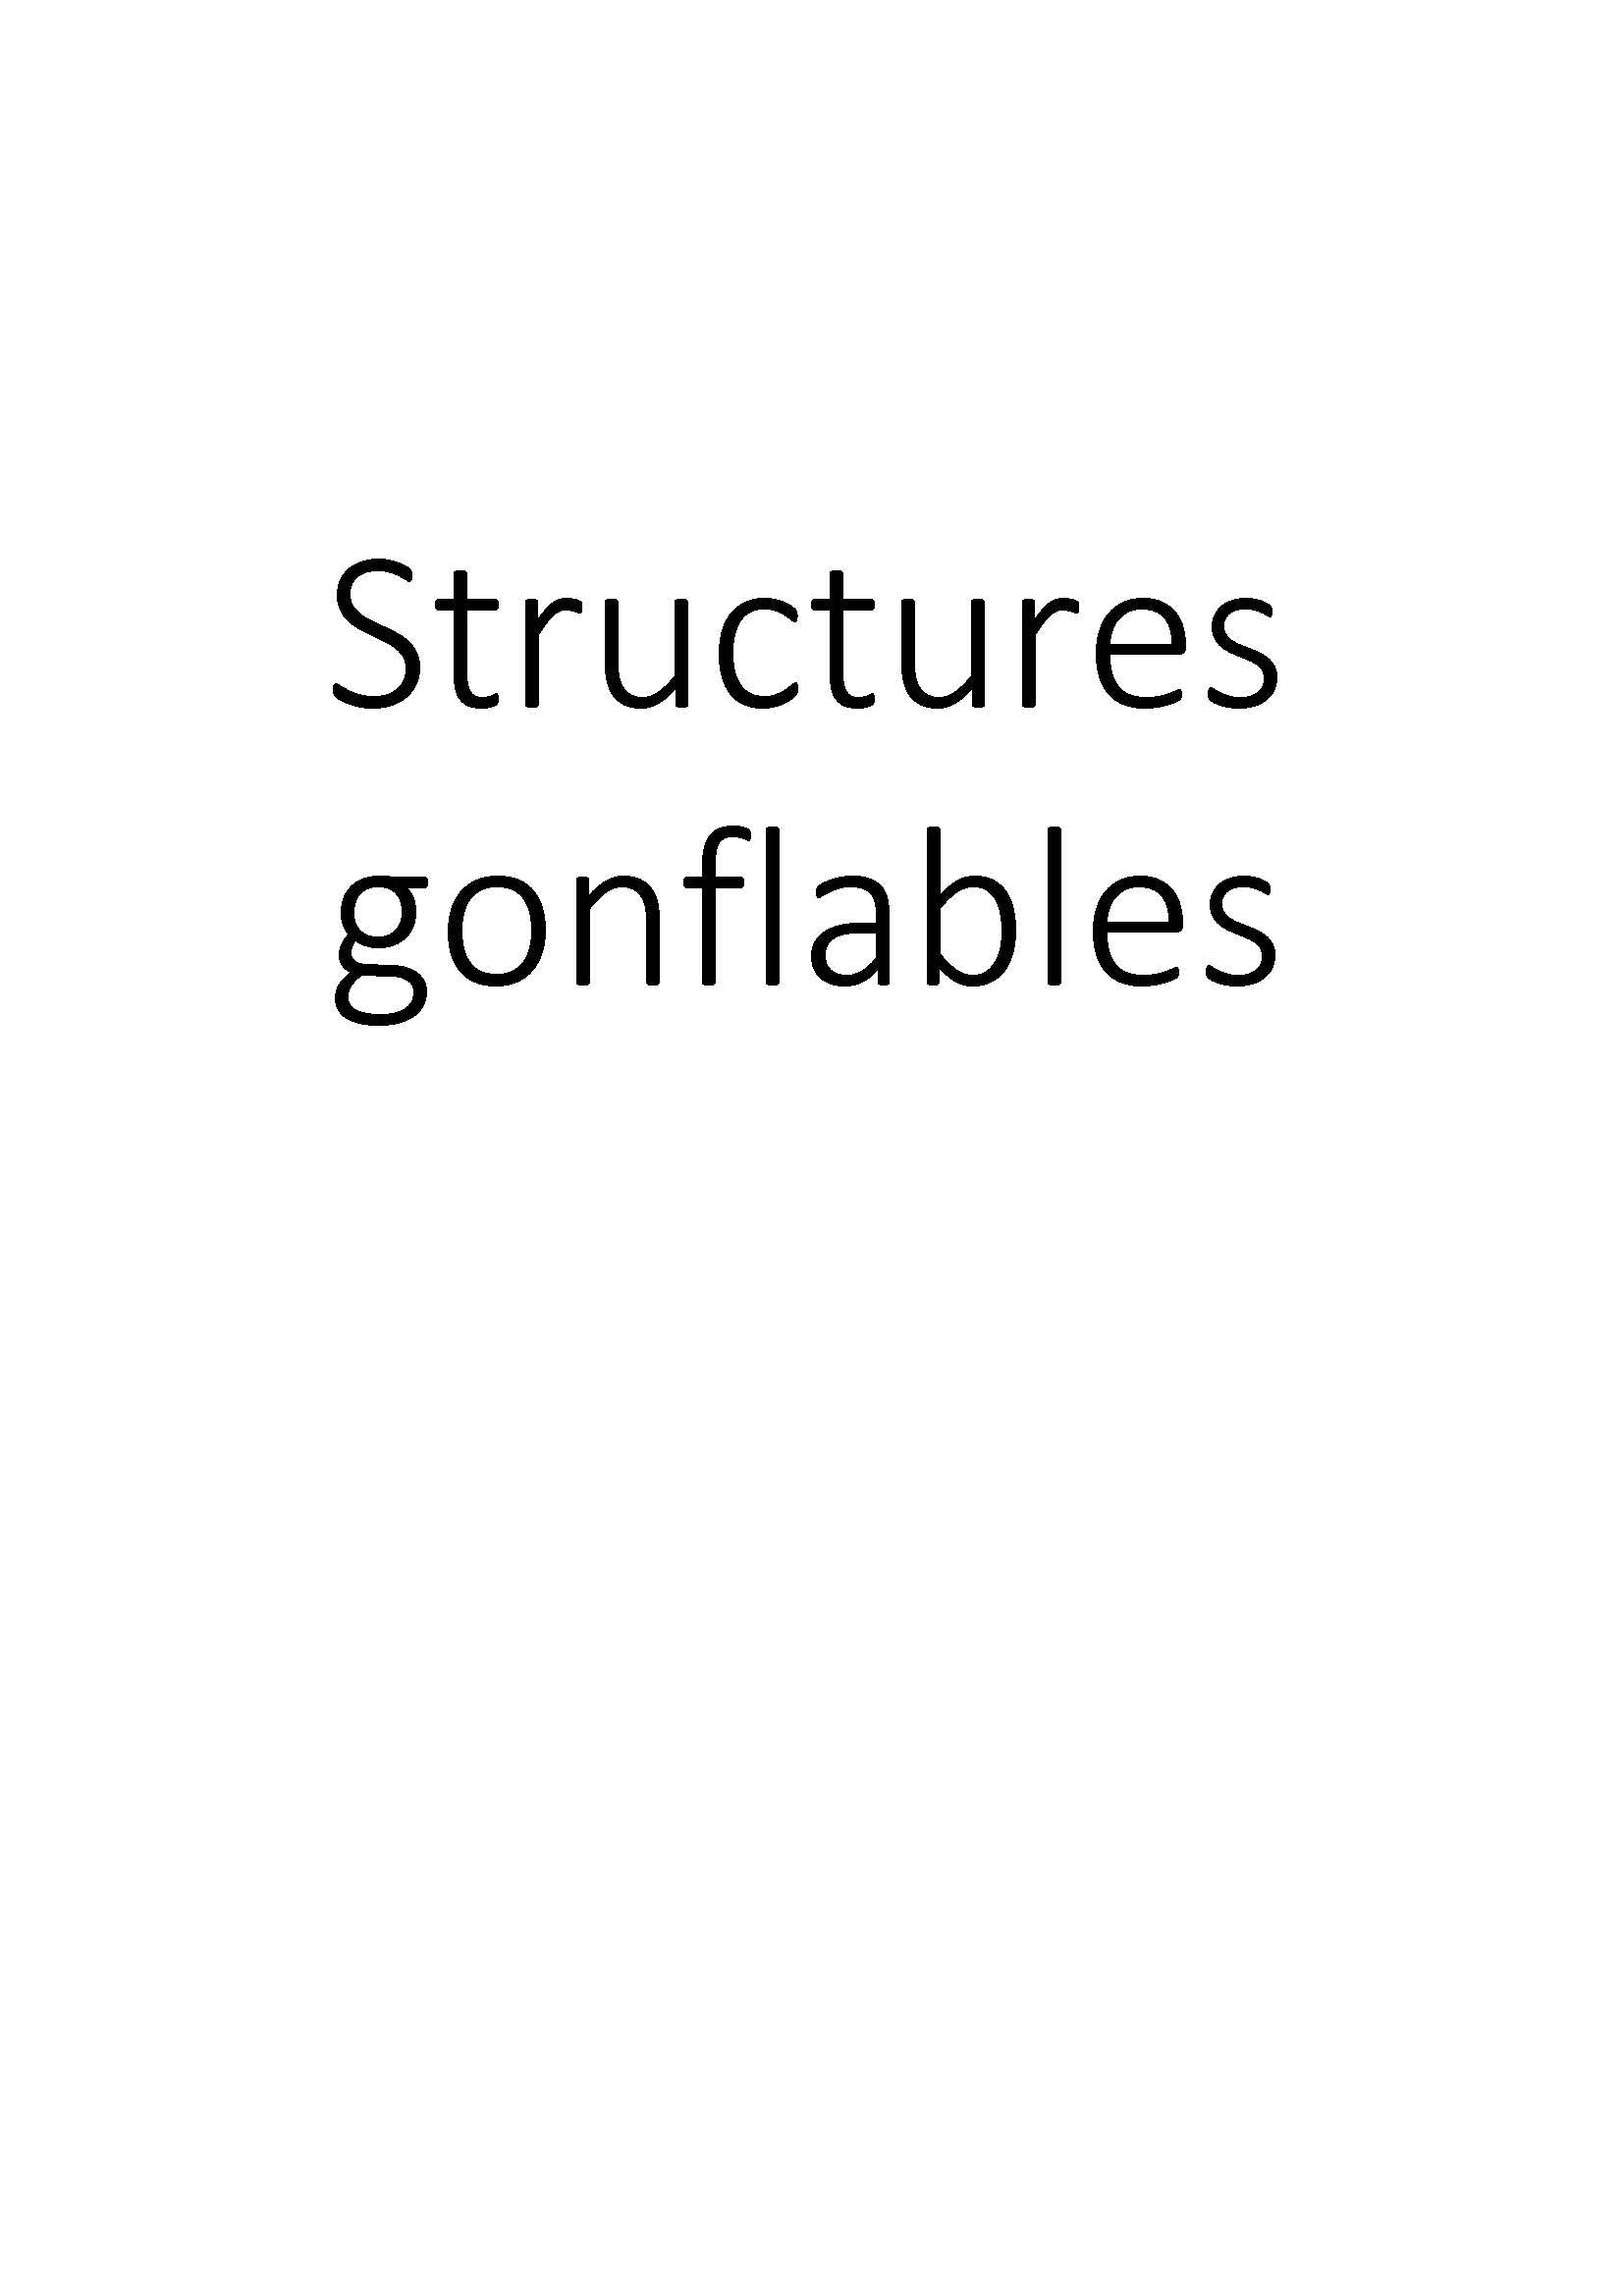 Structures gonflables clicktofournisseur.com